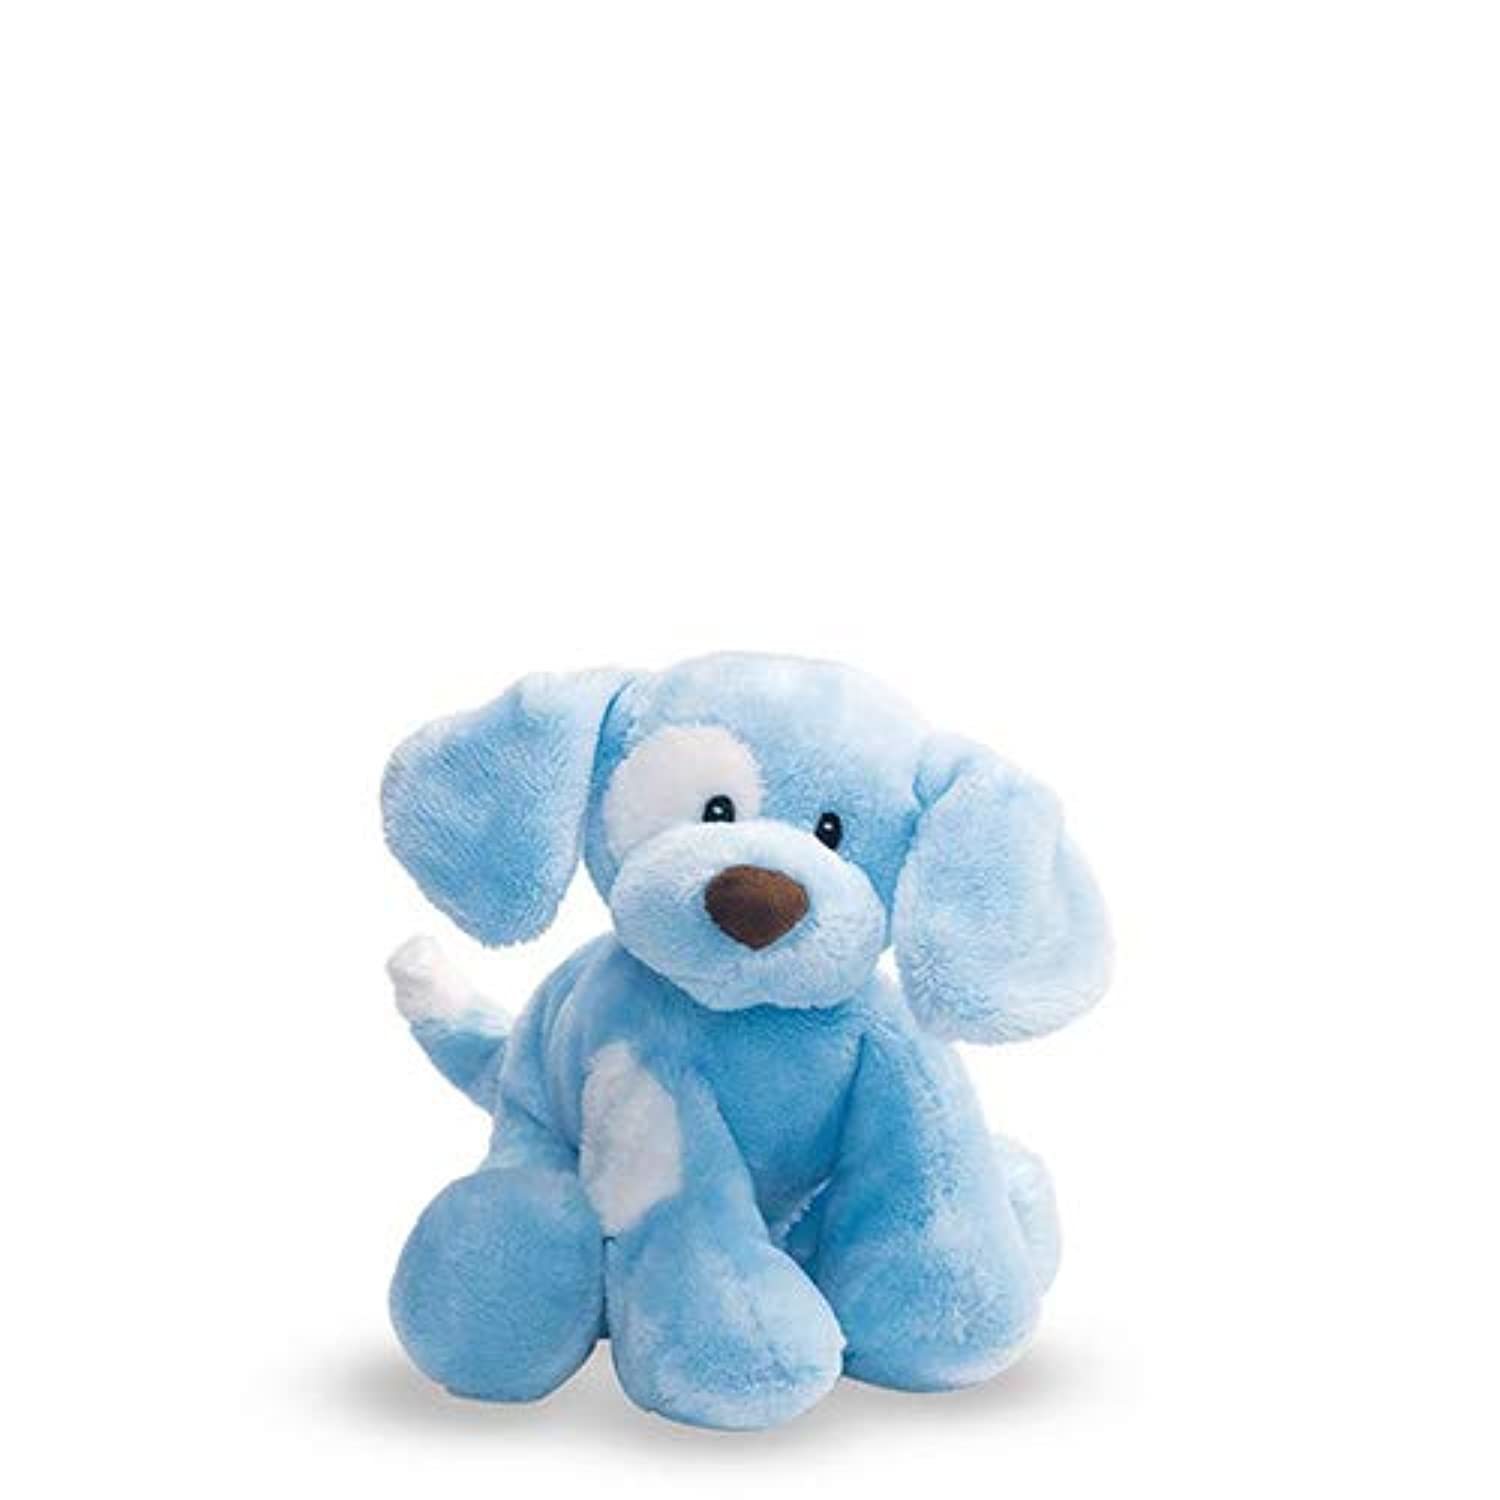 Baby GUND Spunky Dog Stuffed Animal Plush Sound Toy, Blue, 8